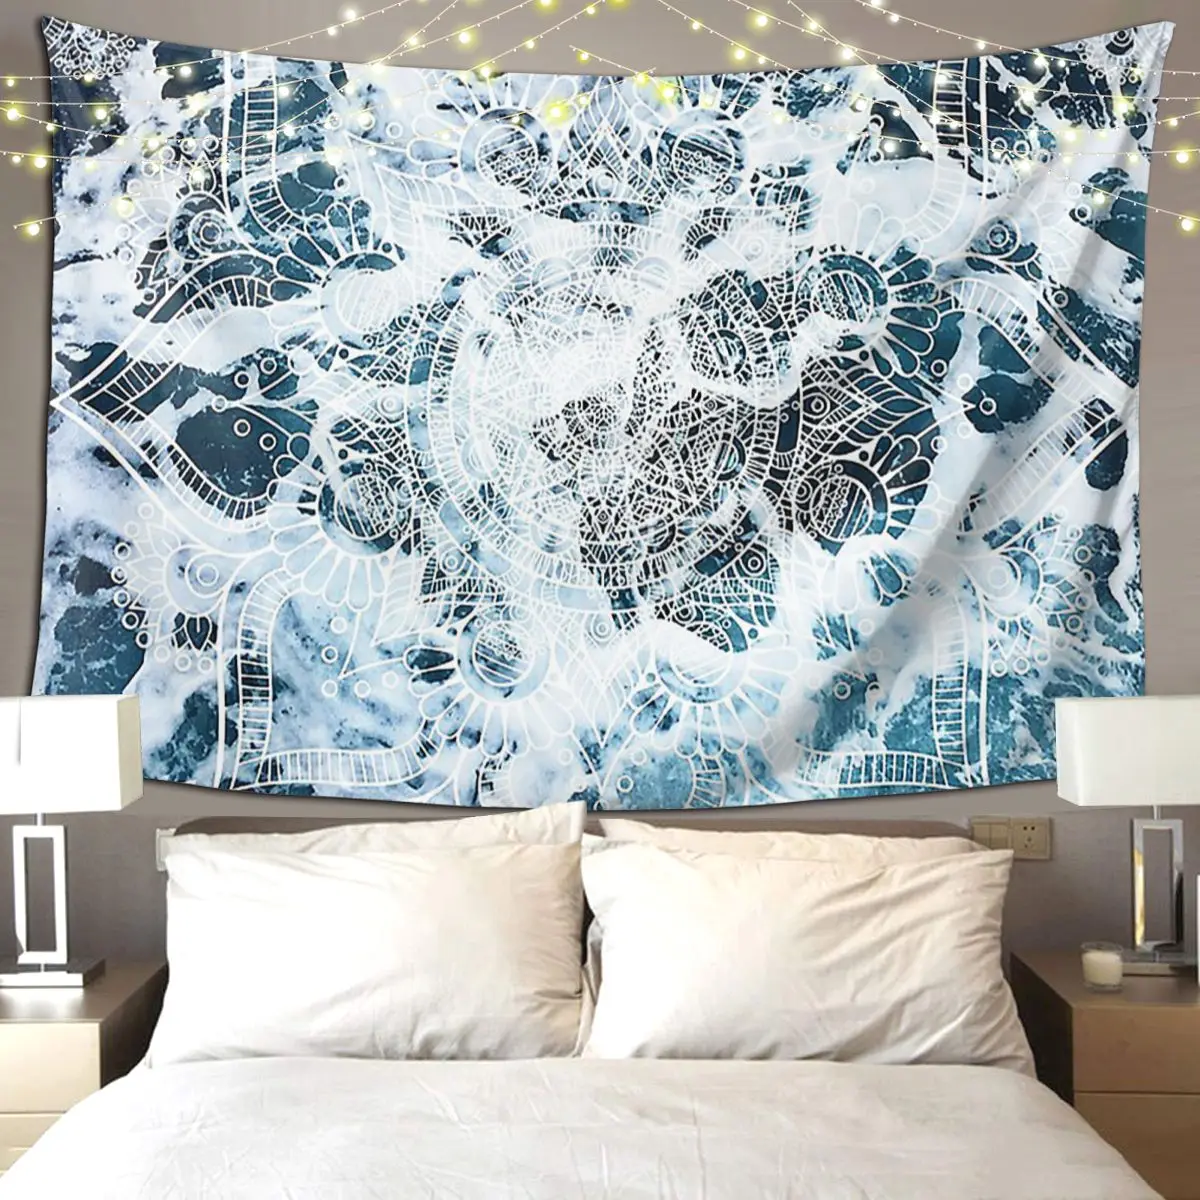 

Ocean Mandala Tapestry Funny Wall Hanging Aesthetic Home Decor Tapestries for Living Room Bedroom Dorm Room